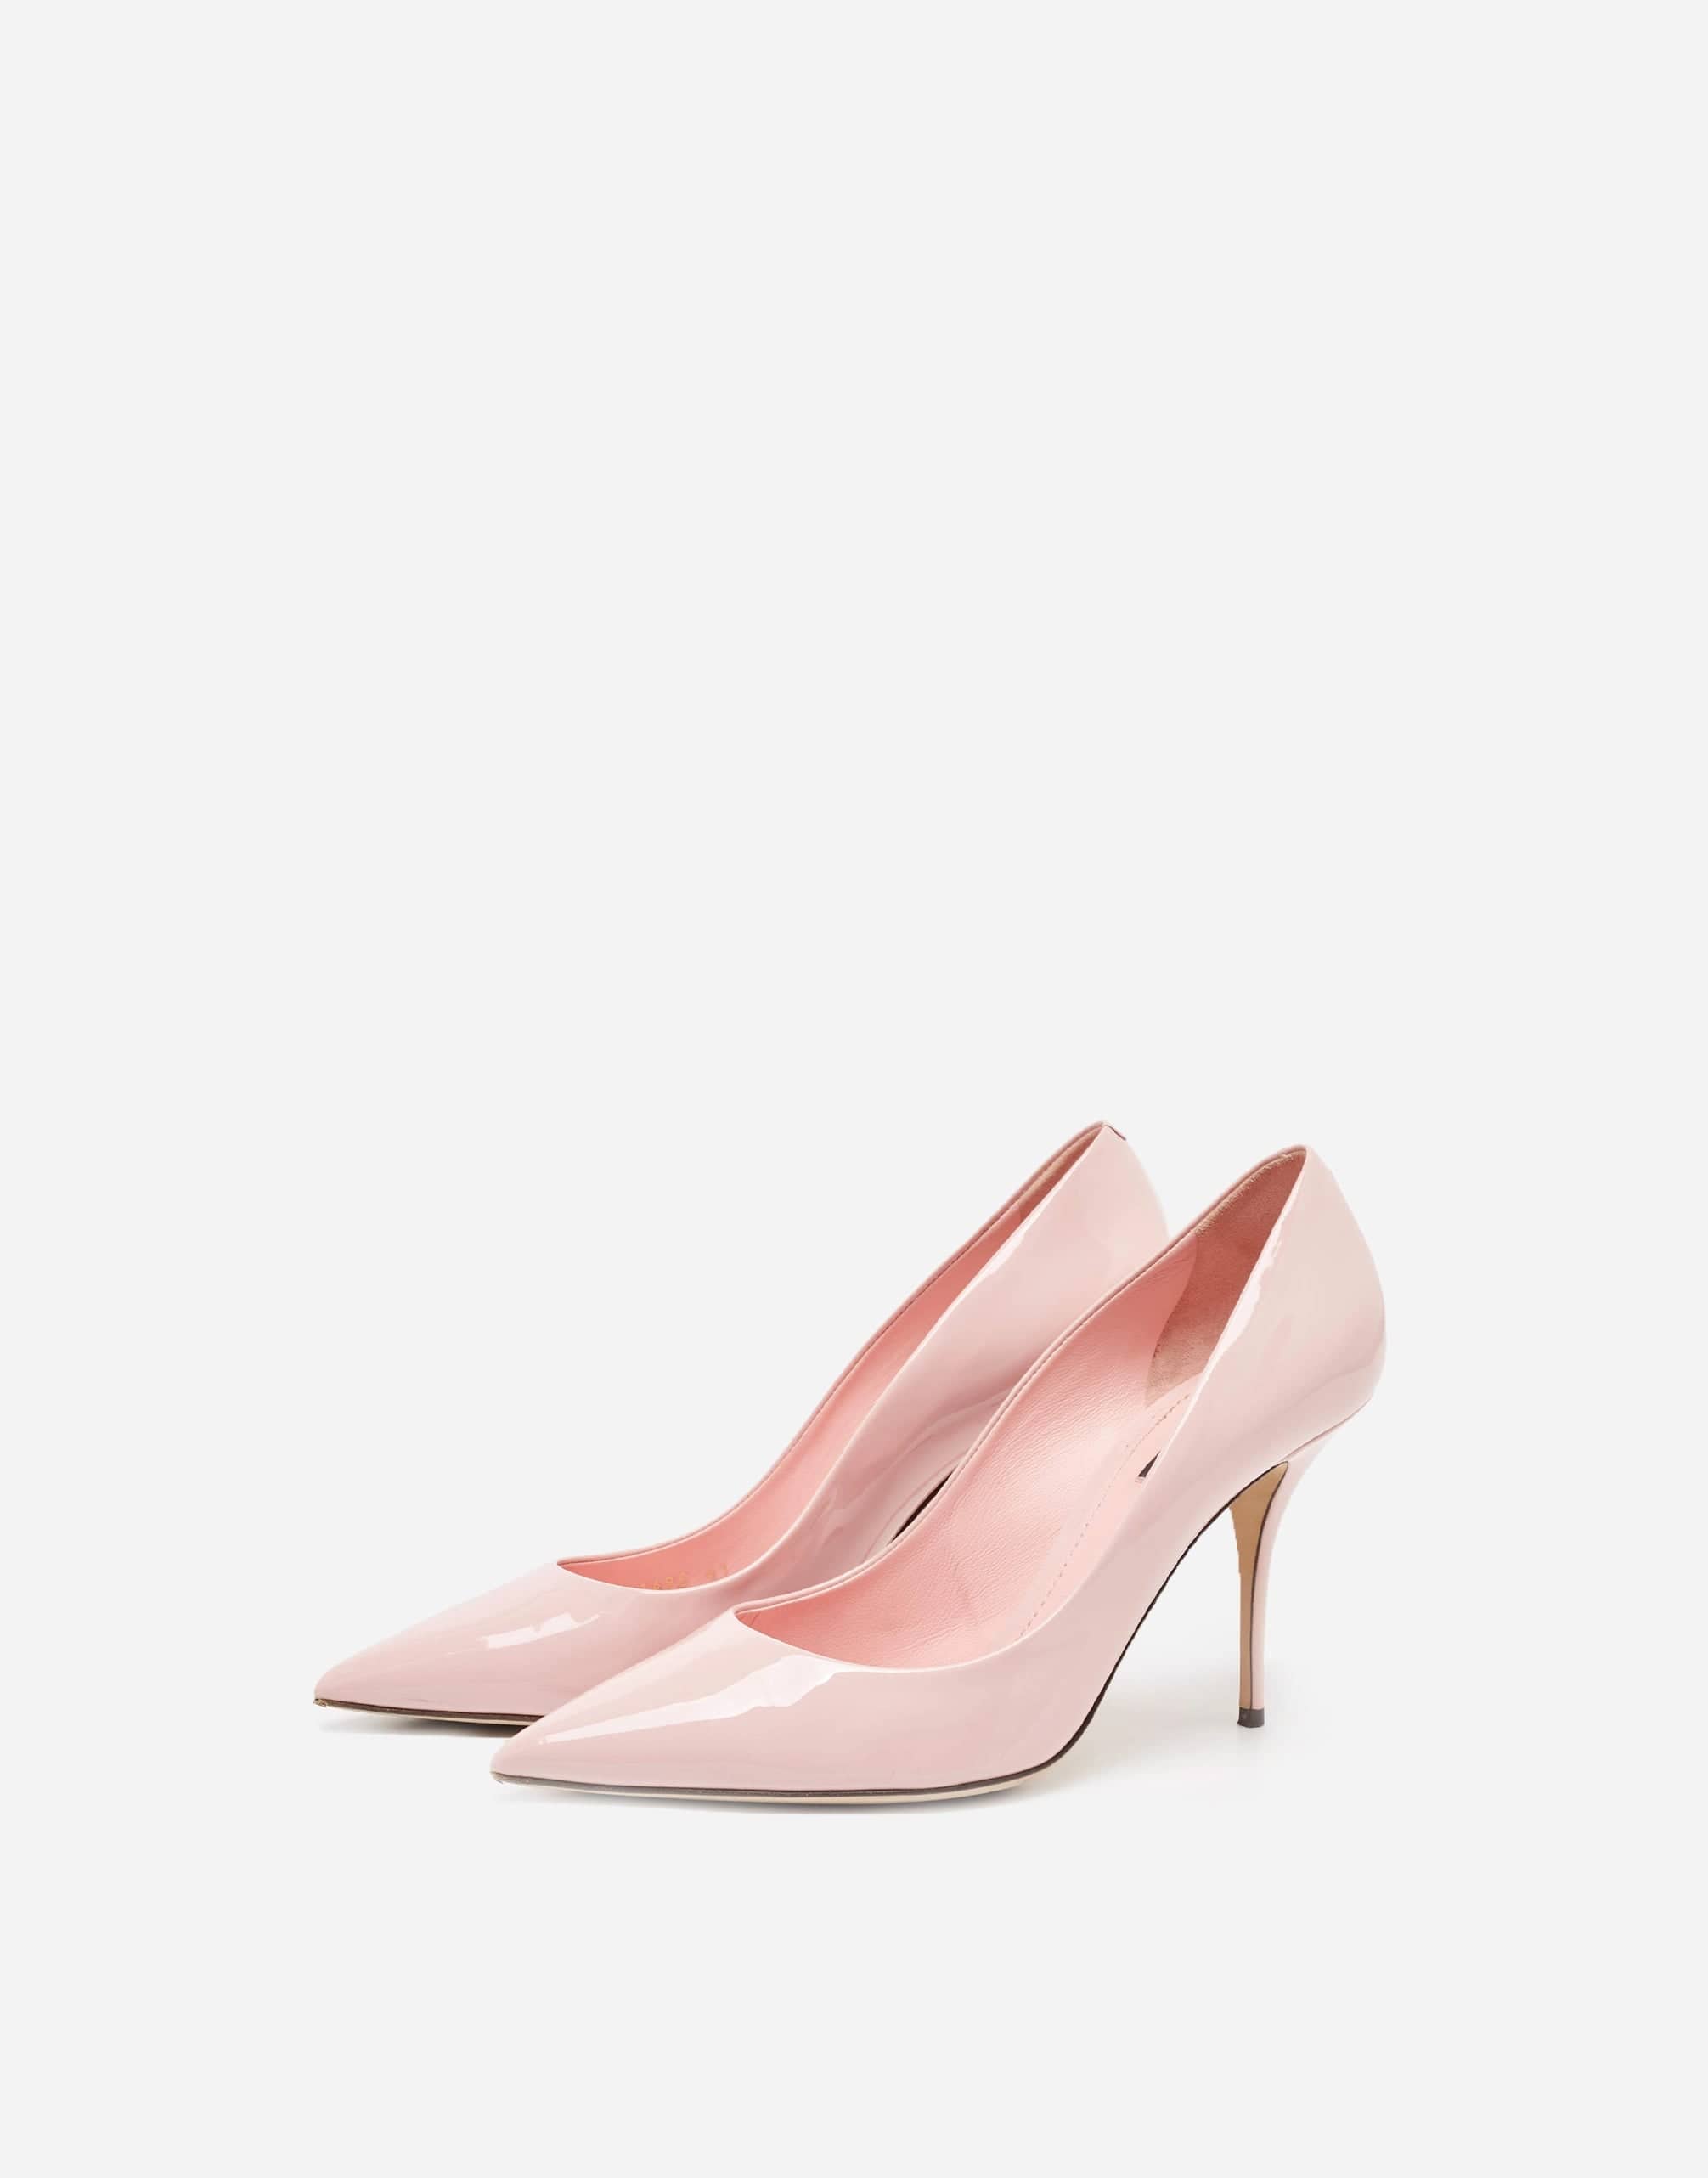 Dolce & Gabbana Light Pink Leather Bellucci Heels Pumps Shoes